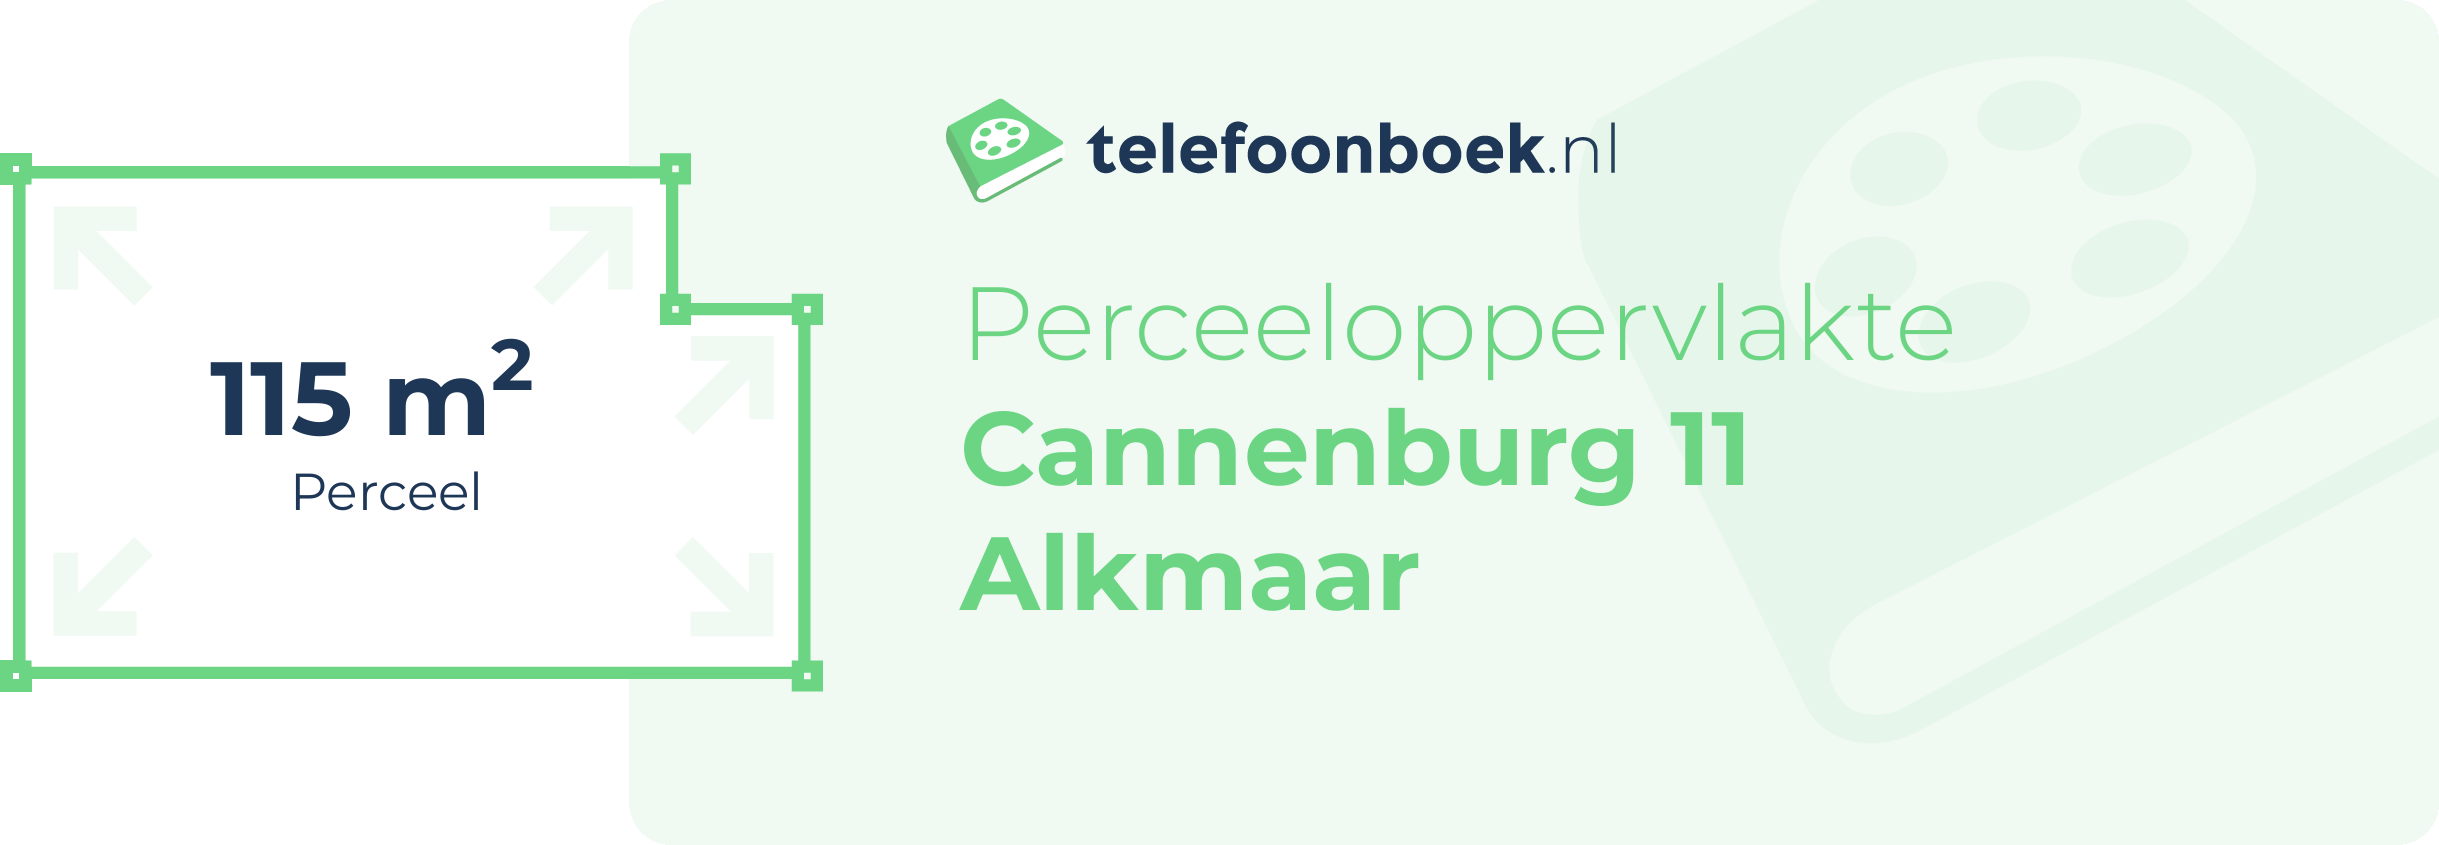 Perceeloppervlakte Cannenburg 11 Alkmaar